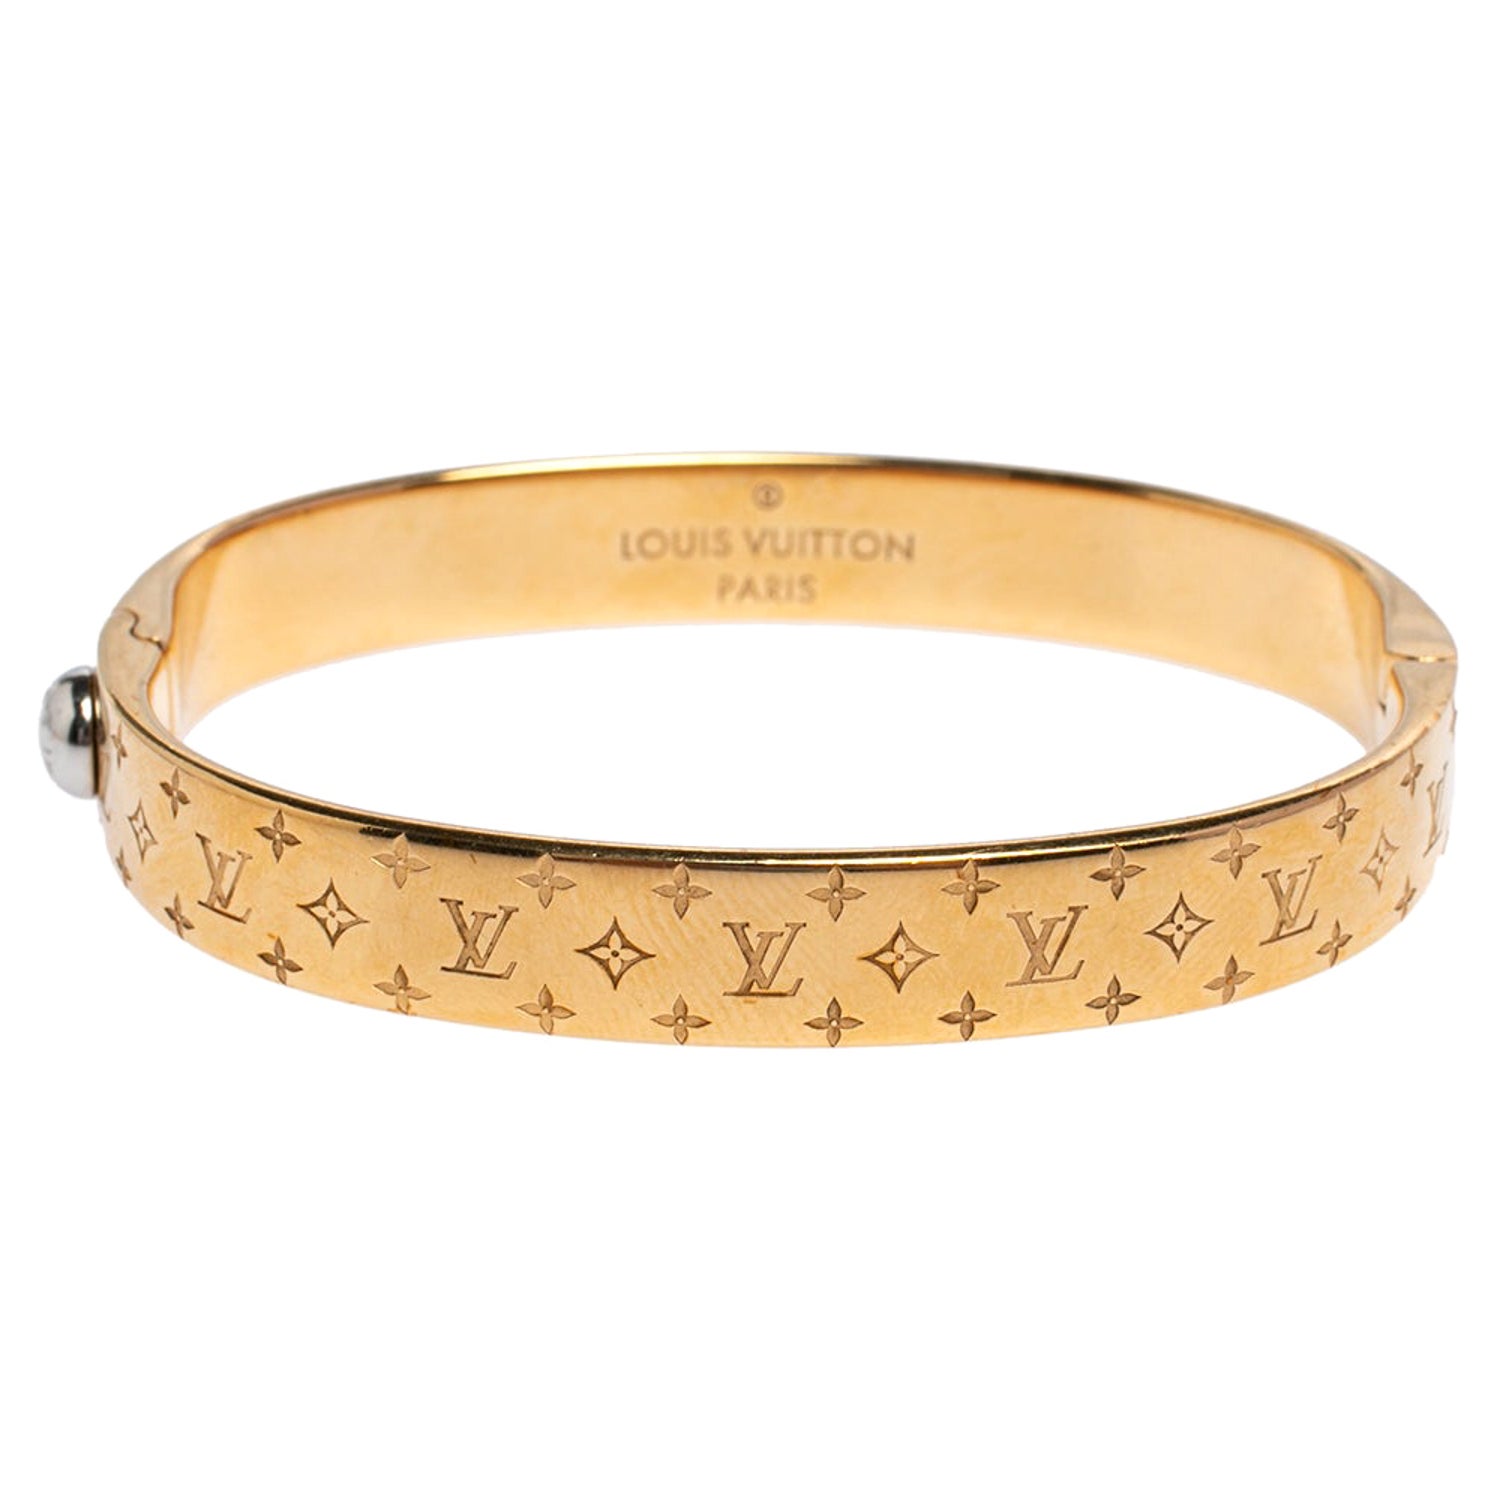 Louis Vuitton Bracelet Slim - 2 For Sale on 1stDibs